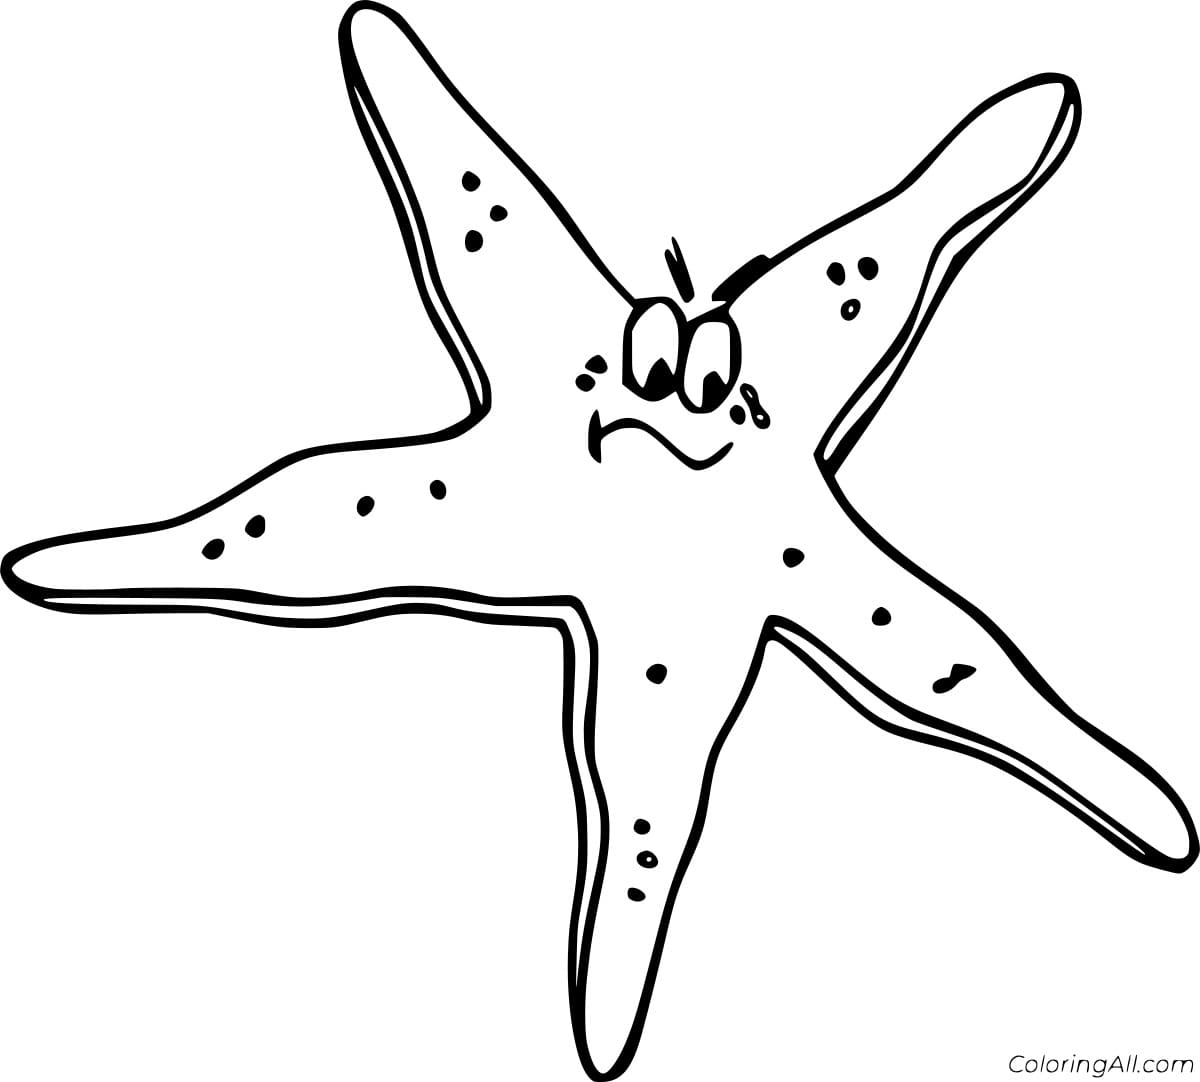 Angry Starfish Image Coloring Page